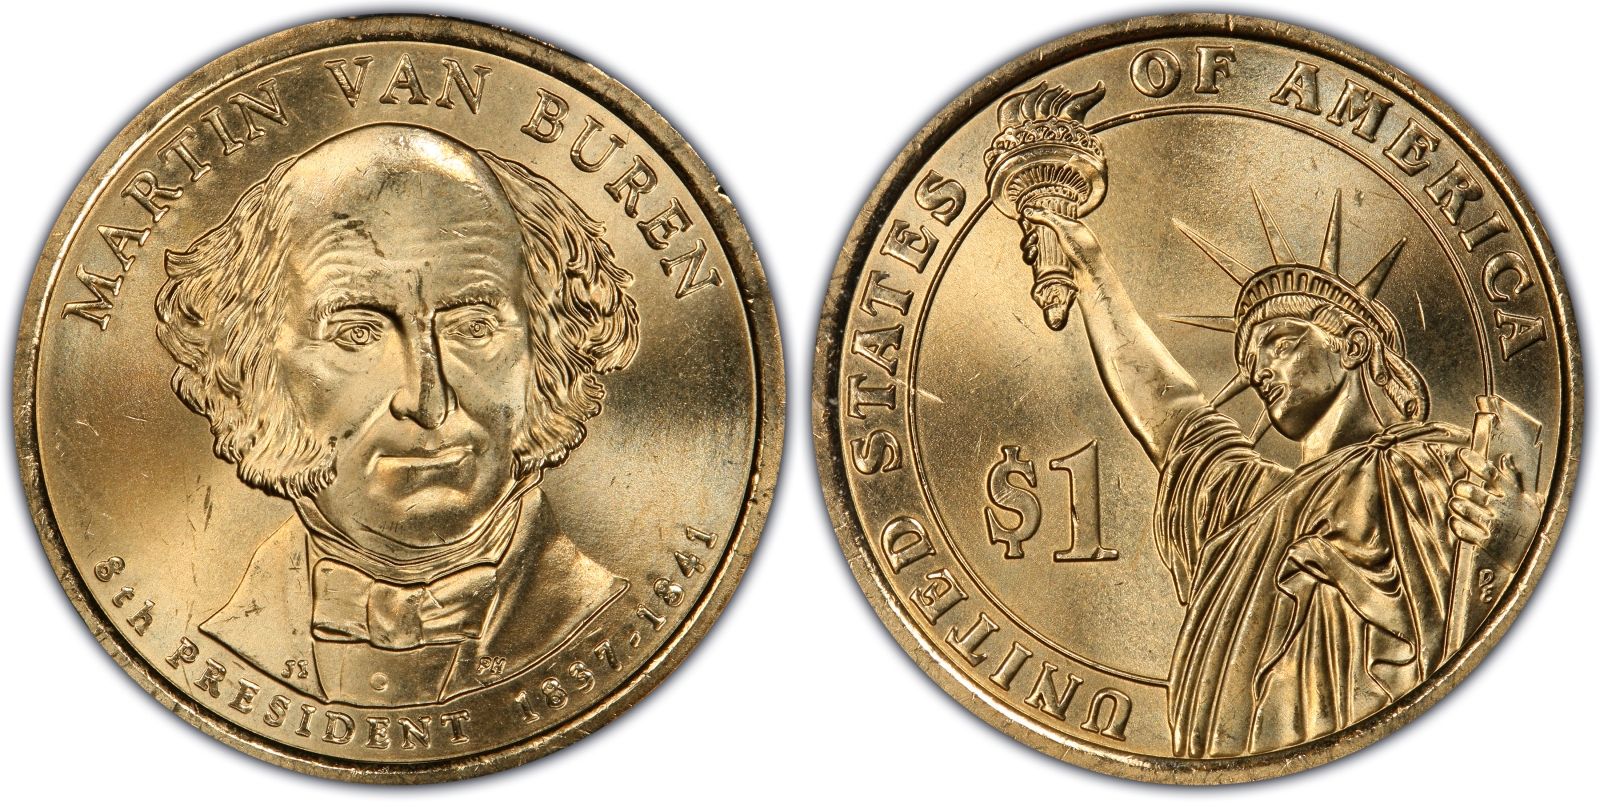 2008 P /& D Martin Van Buren Pres Coins 8th Pres Nice Circulated.